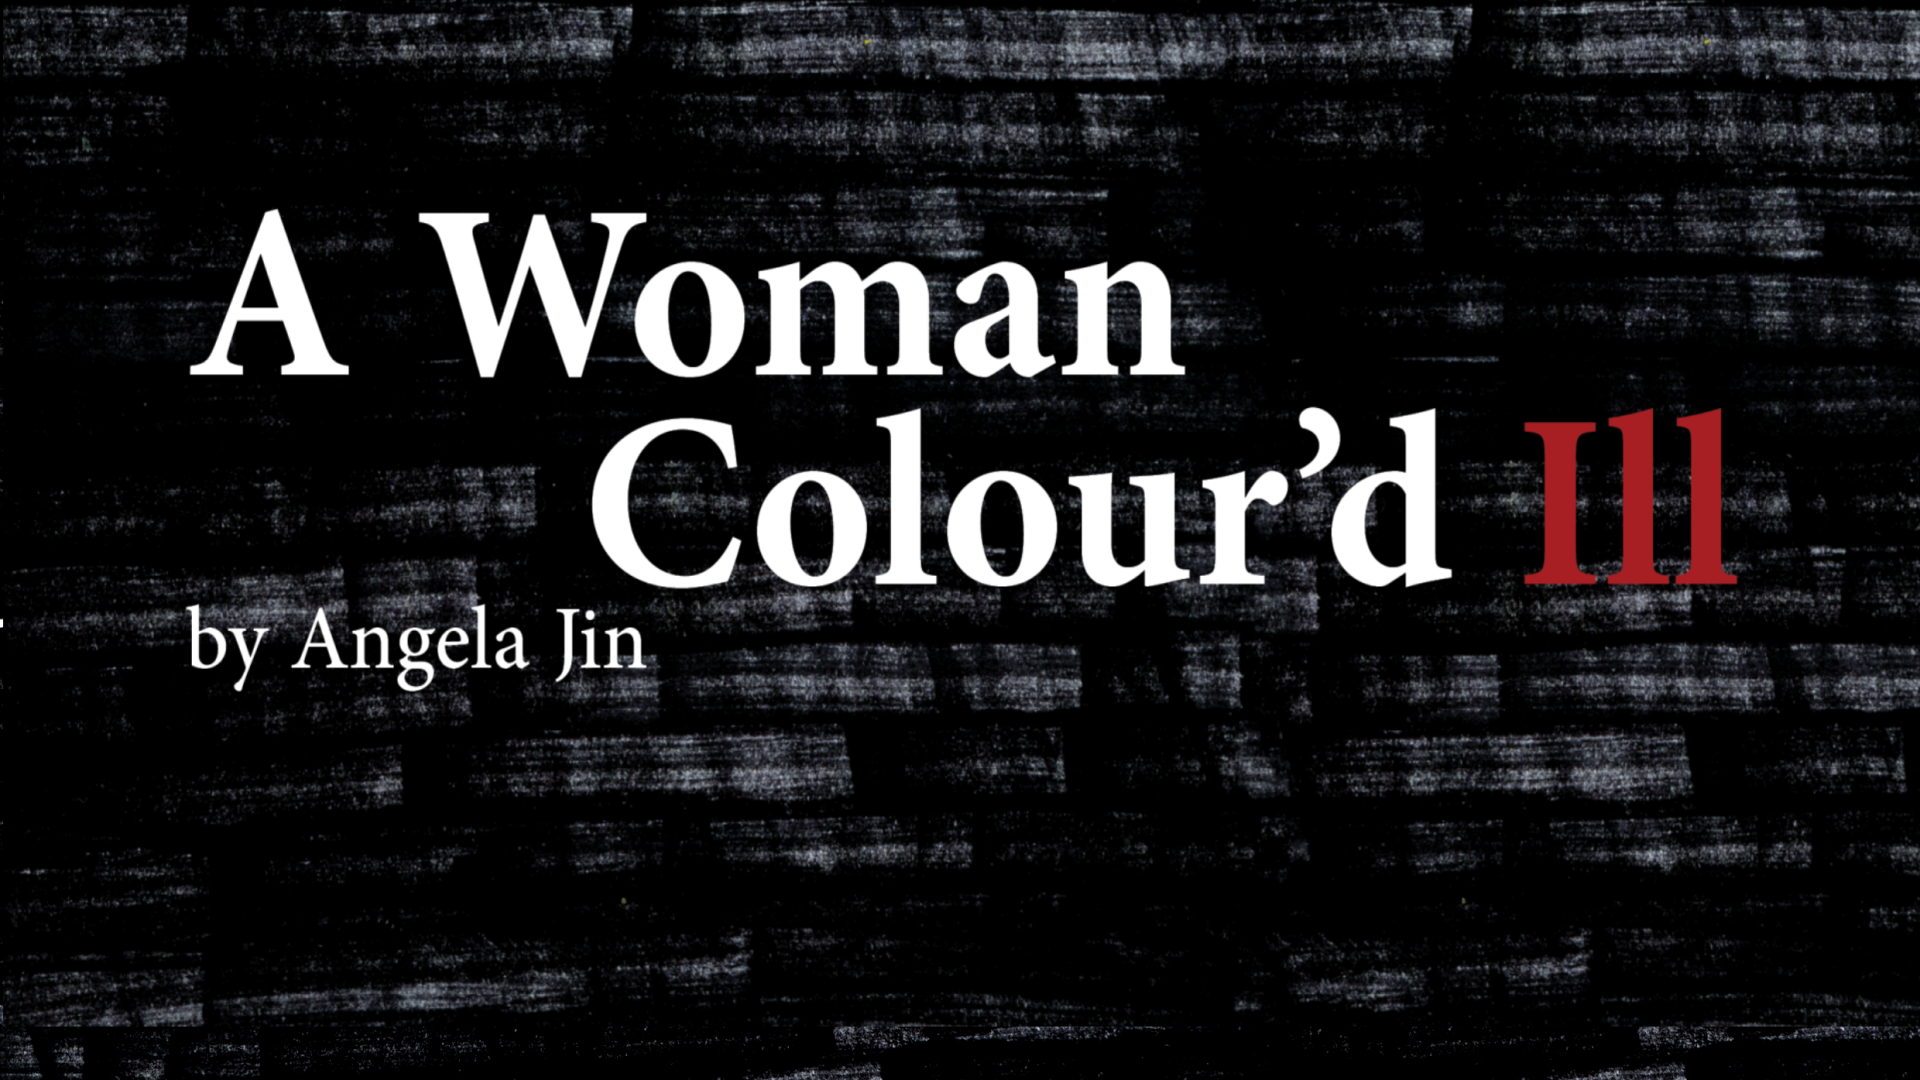 A Woman Colour'd Ill